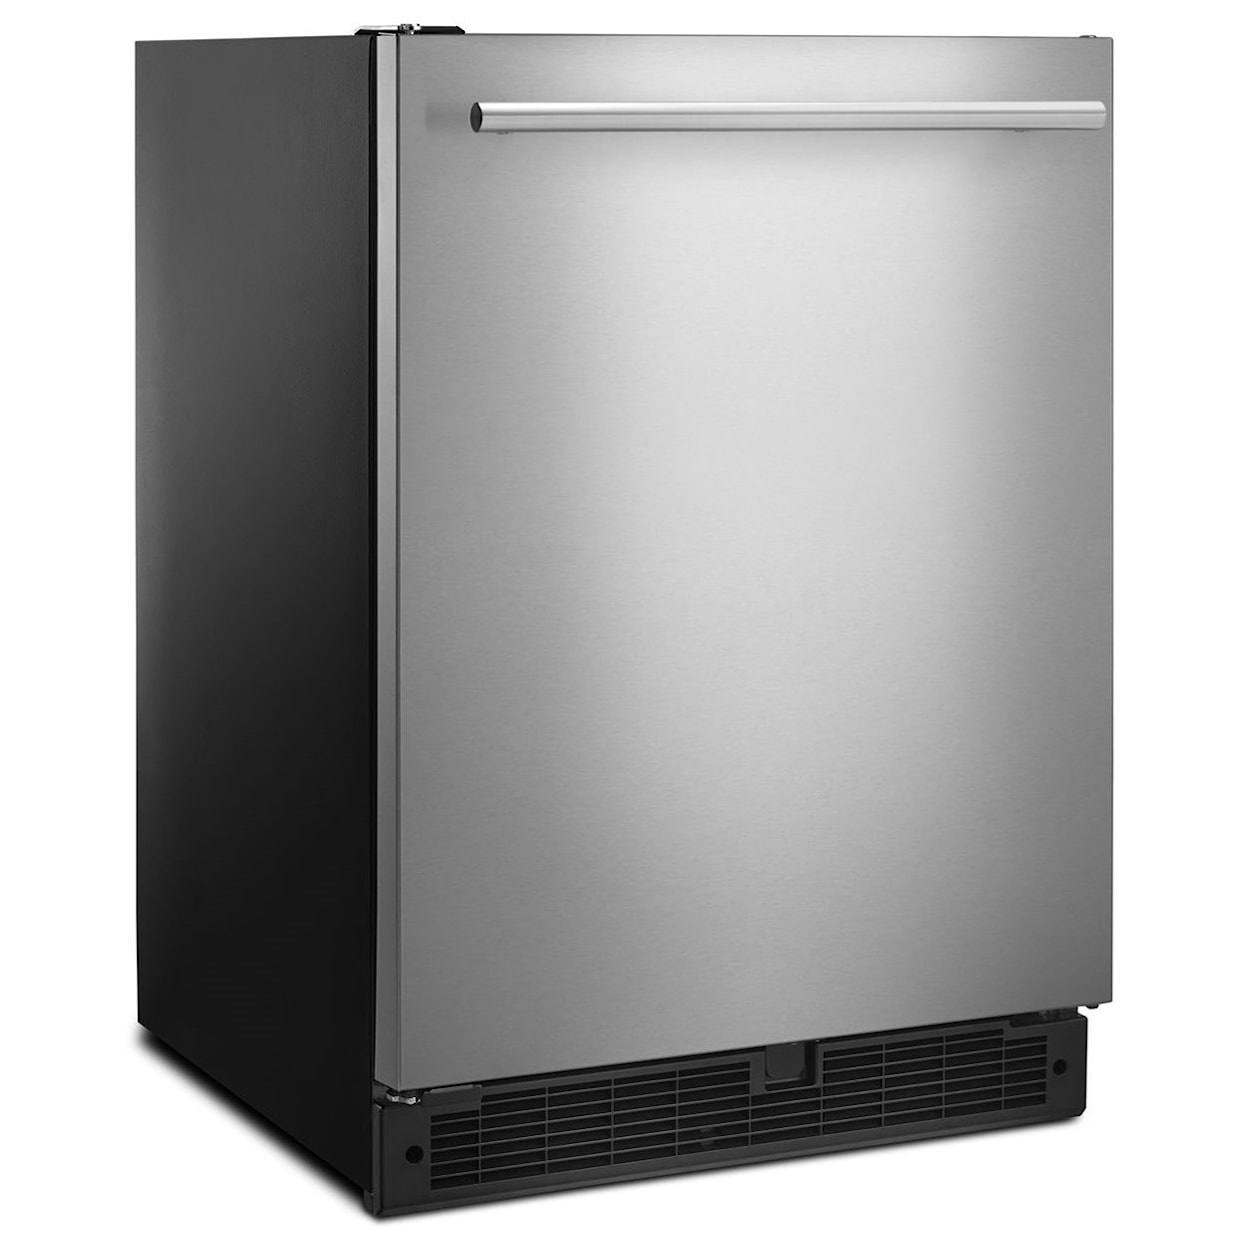 Whirlpool All Refrigerators 24-inch Wide Undercounter Refrigerator